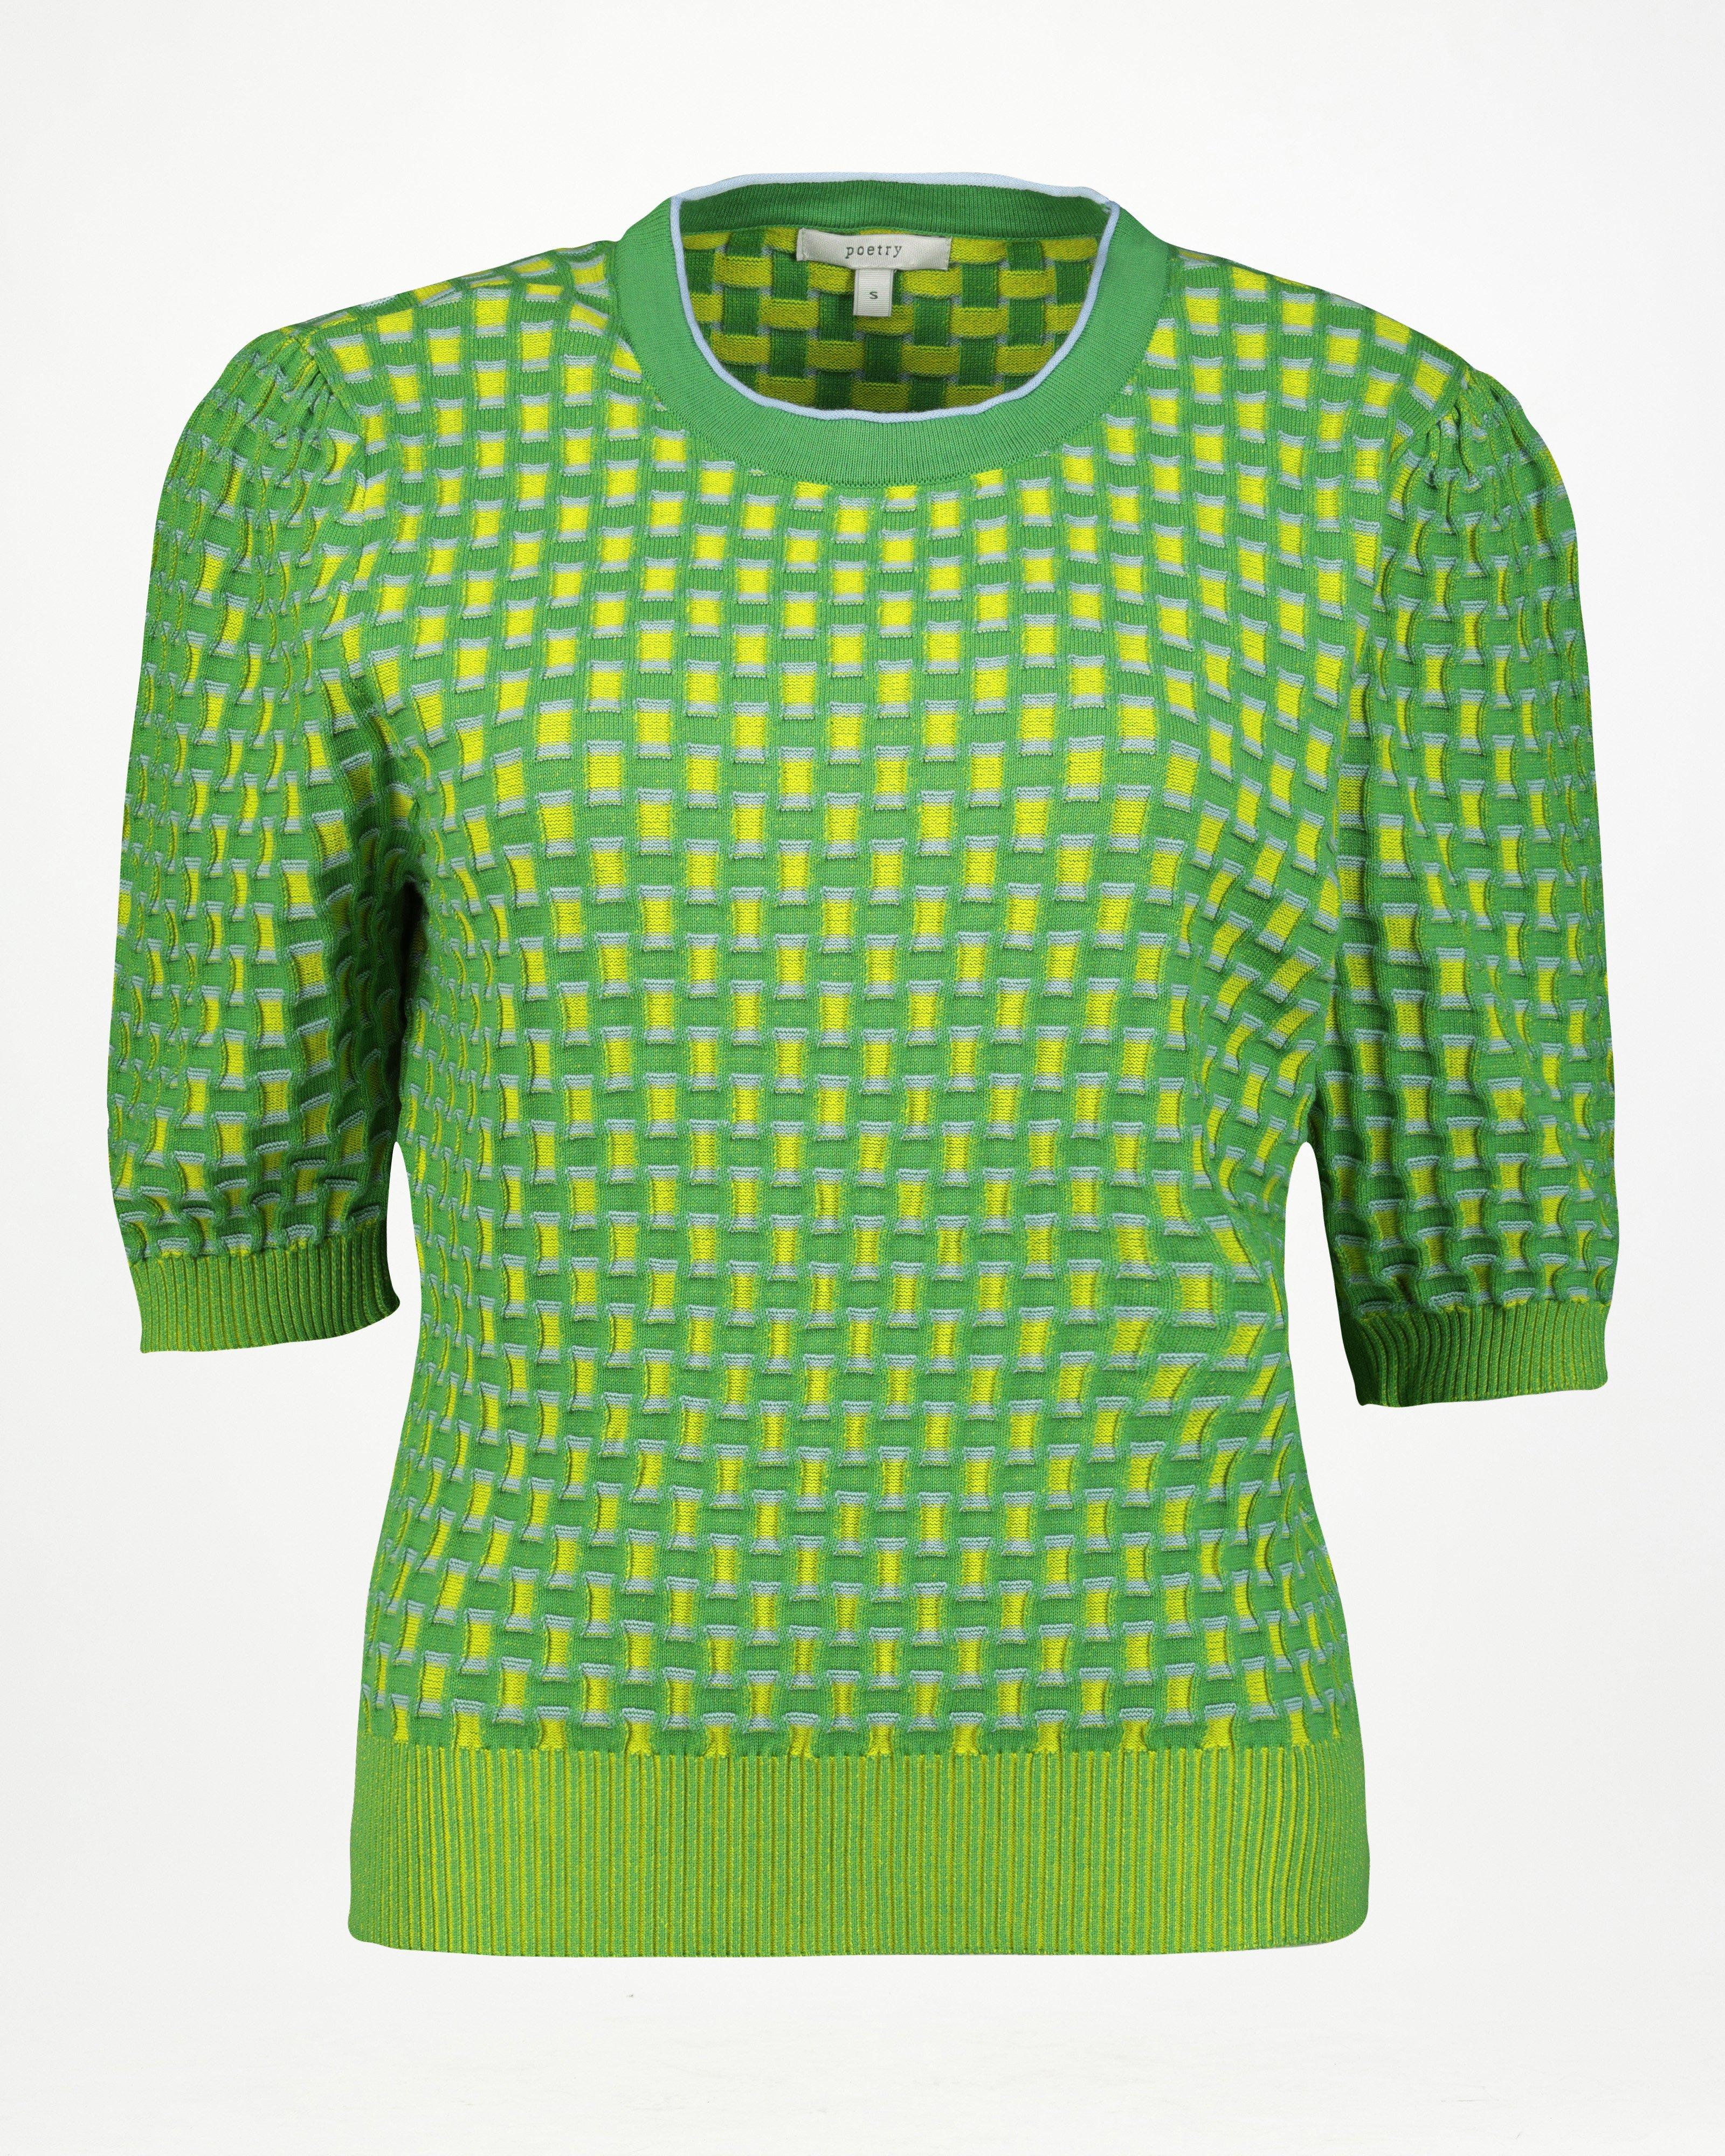 Joji Short Sleeve Knitwear Top -  Green